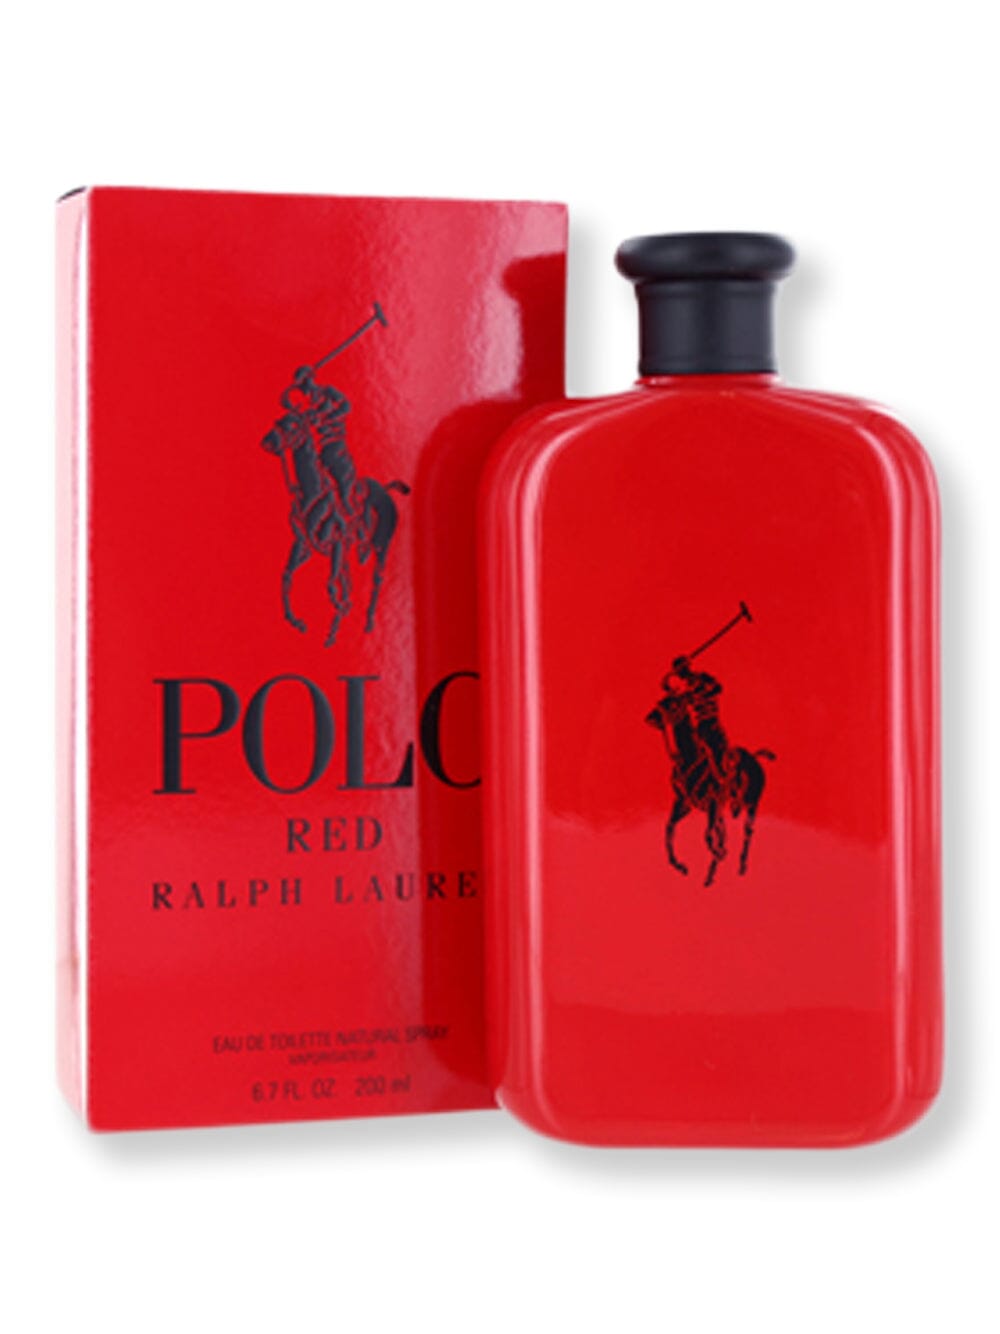 Ralph Lauren Ralph Lauren Polo Red EDT Spray 6.7 oz Perfume 